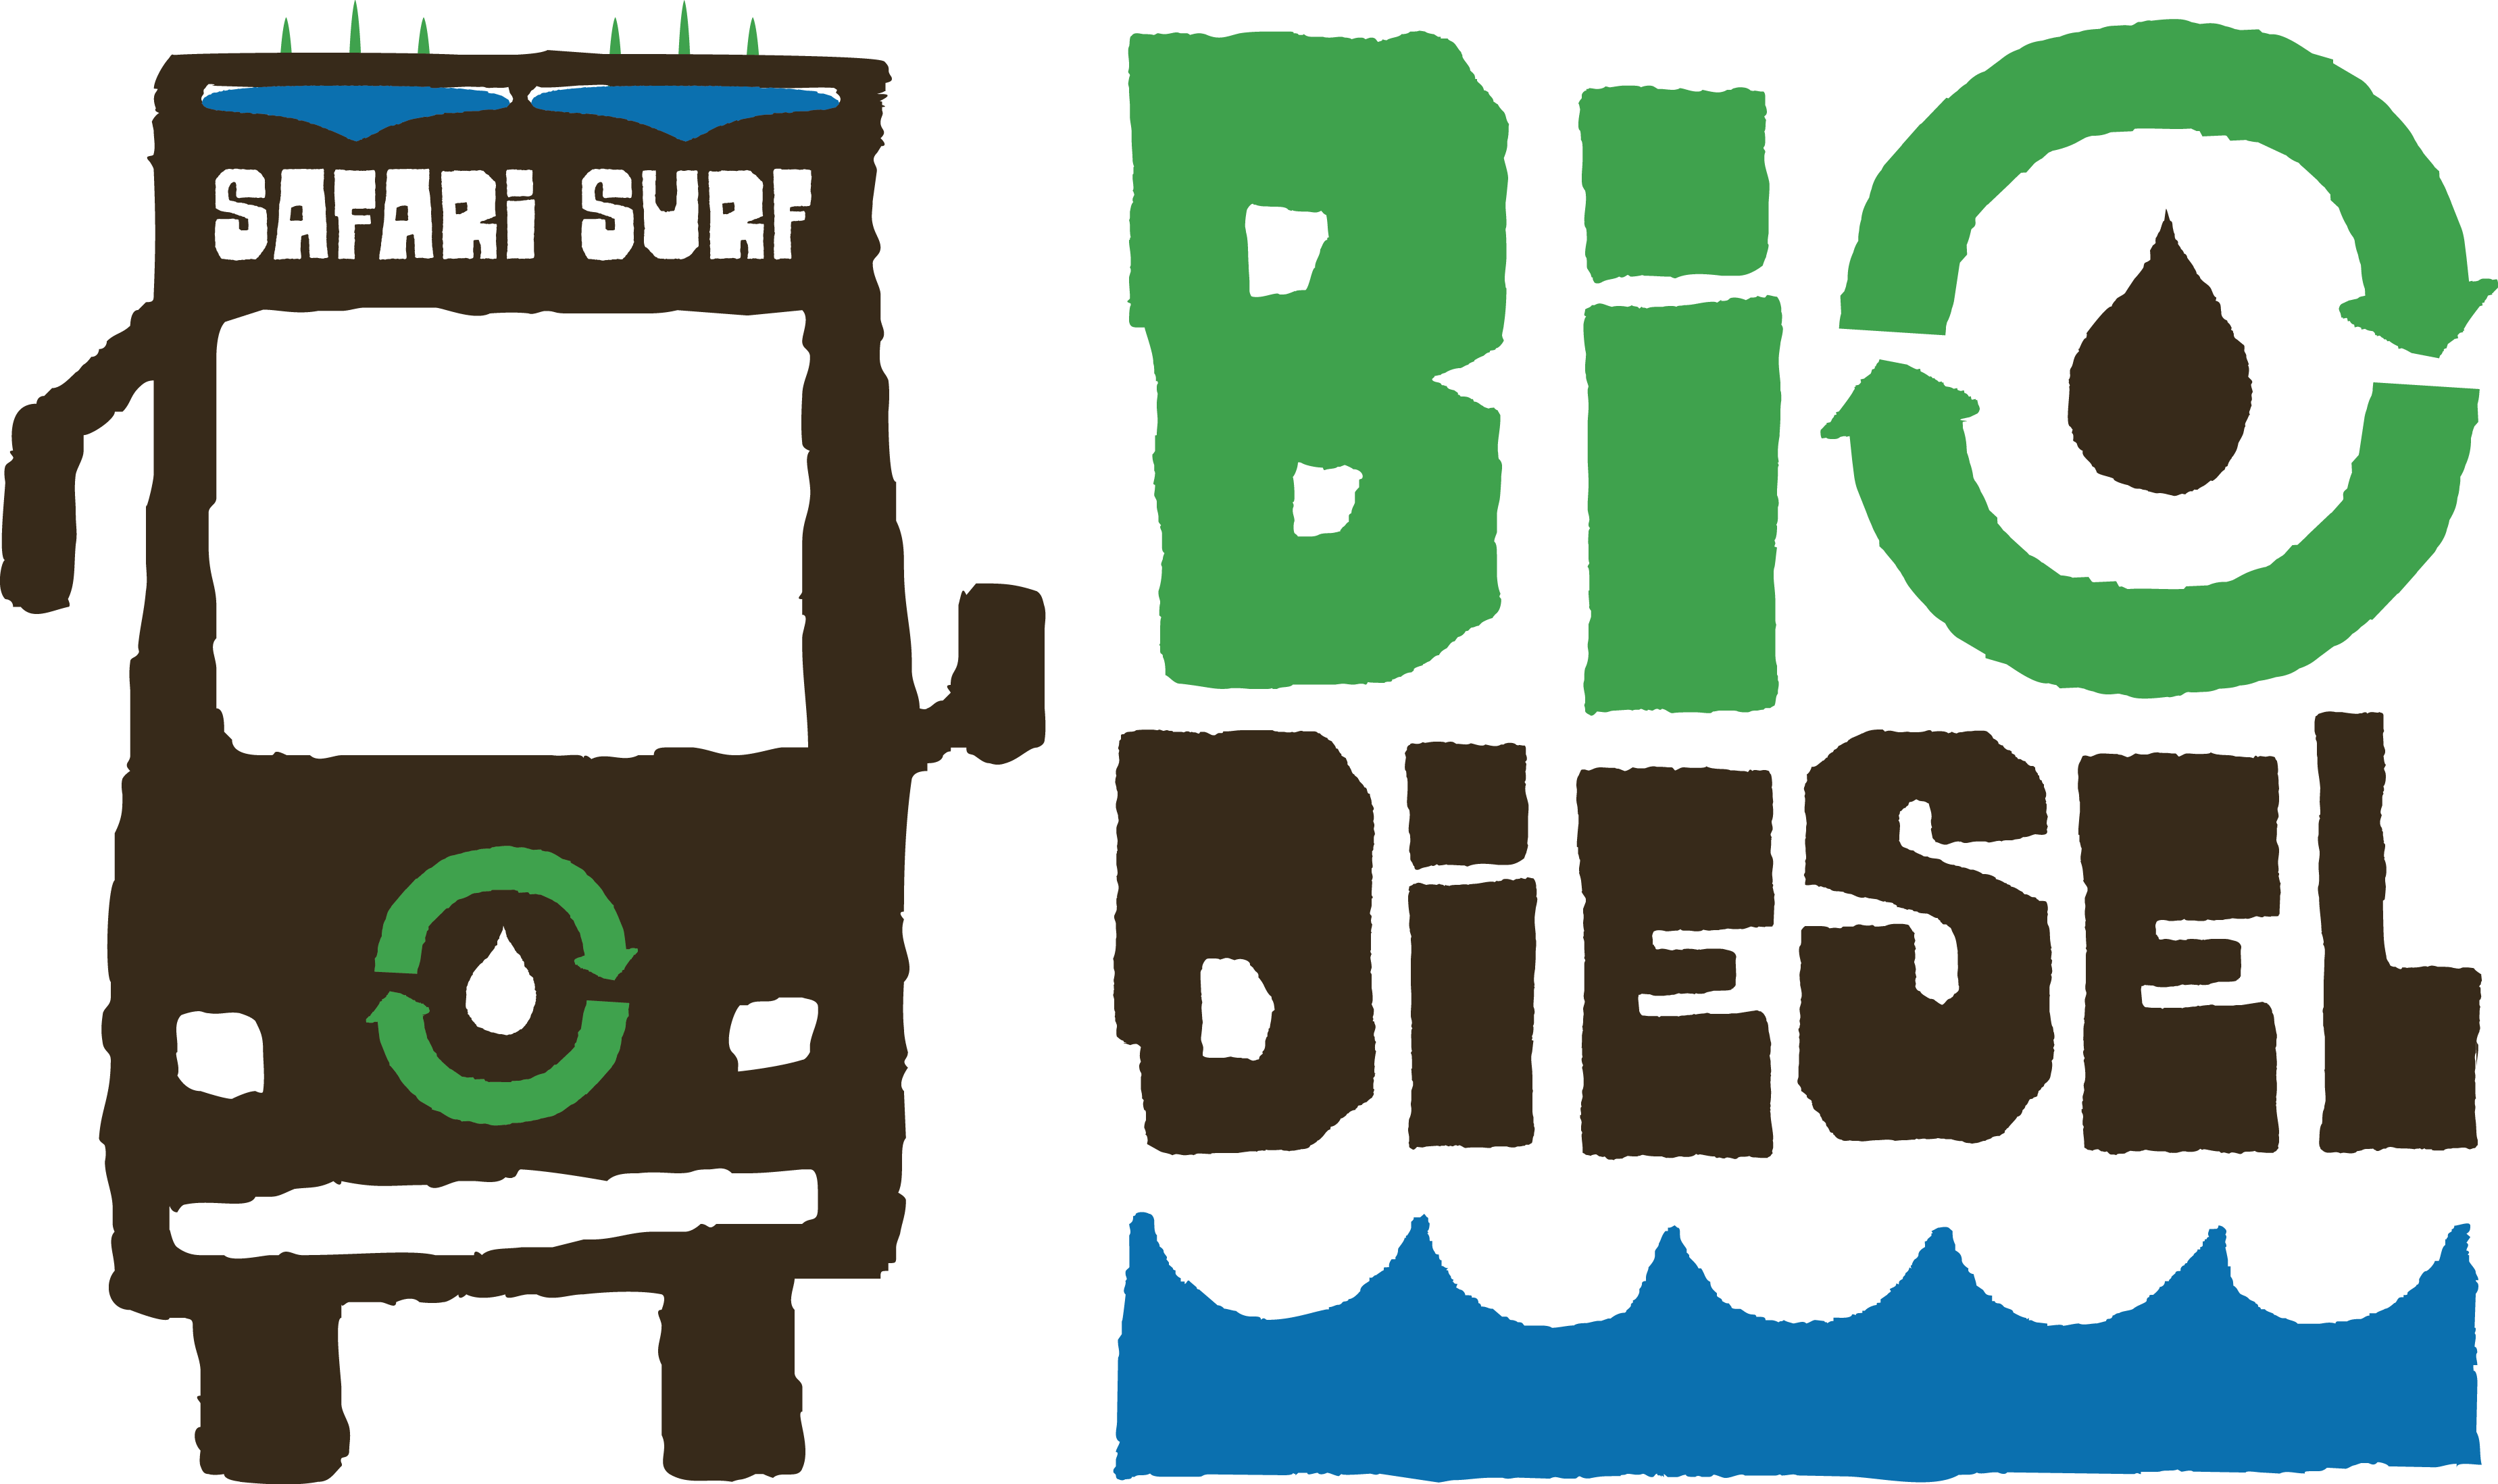 innovative-biodiesel-project-safari-surf-logo